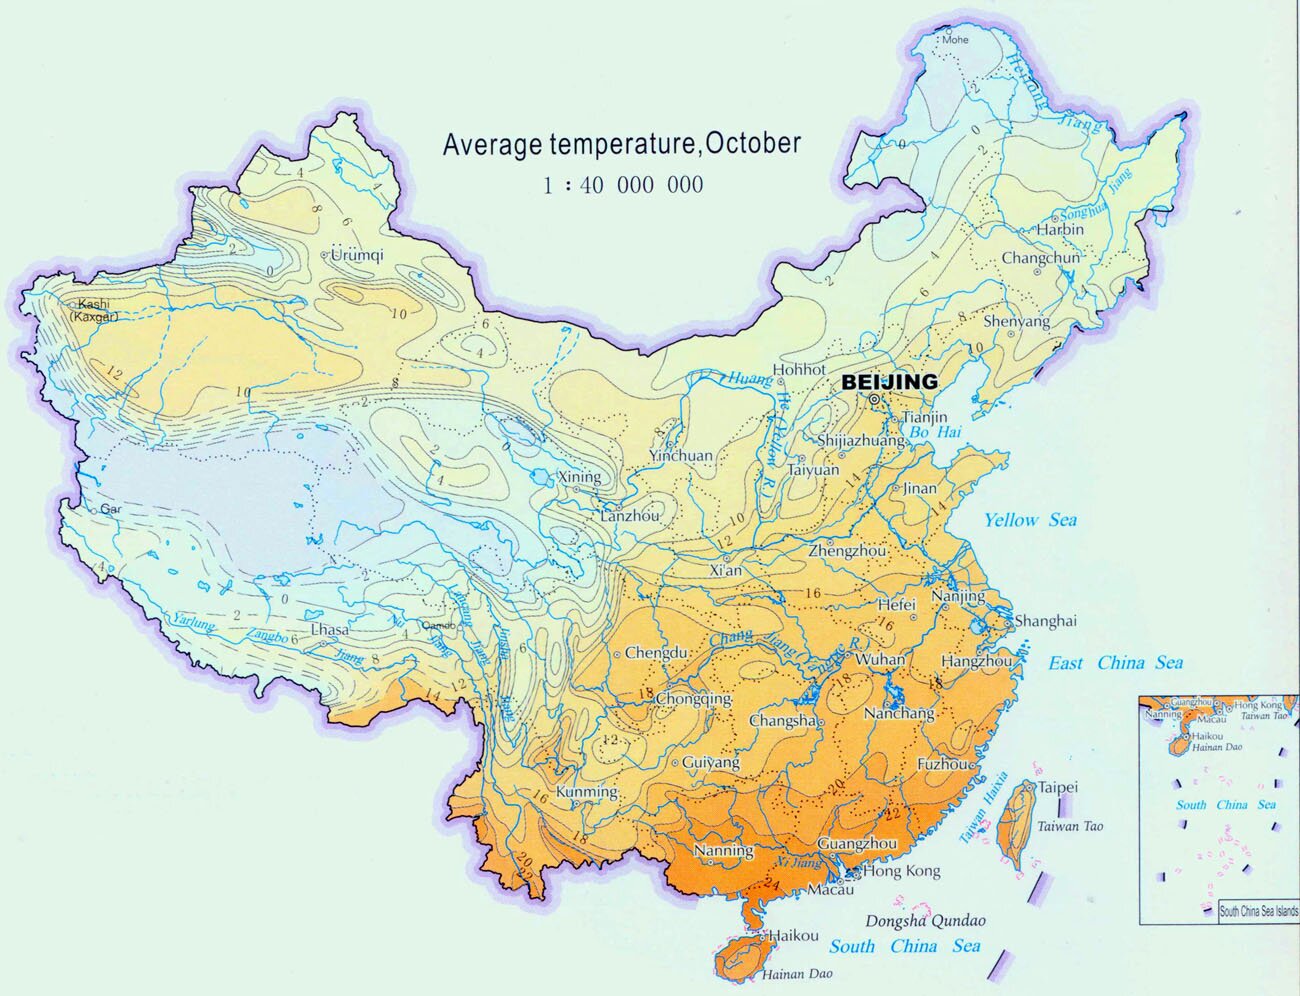 Природно климатические условия китая кратко. Климатическая карта Китая. Климатические пояса Китая карта. Климатические зоны Китая карта. Климатические зоны Китая.